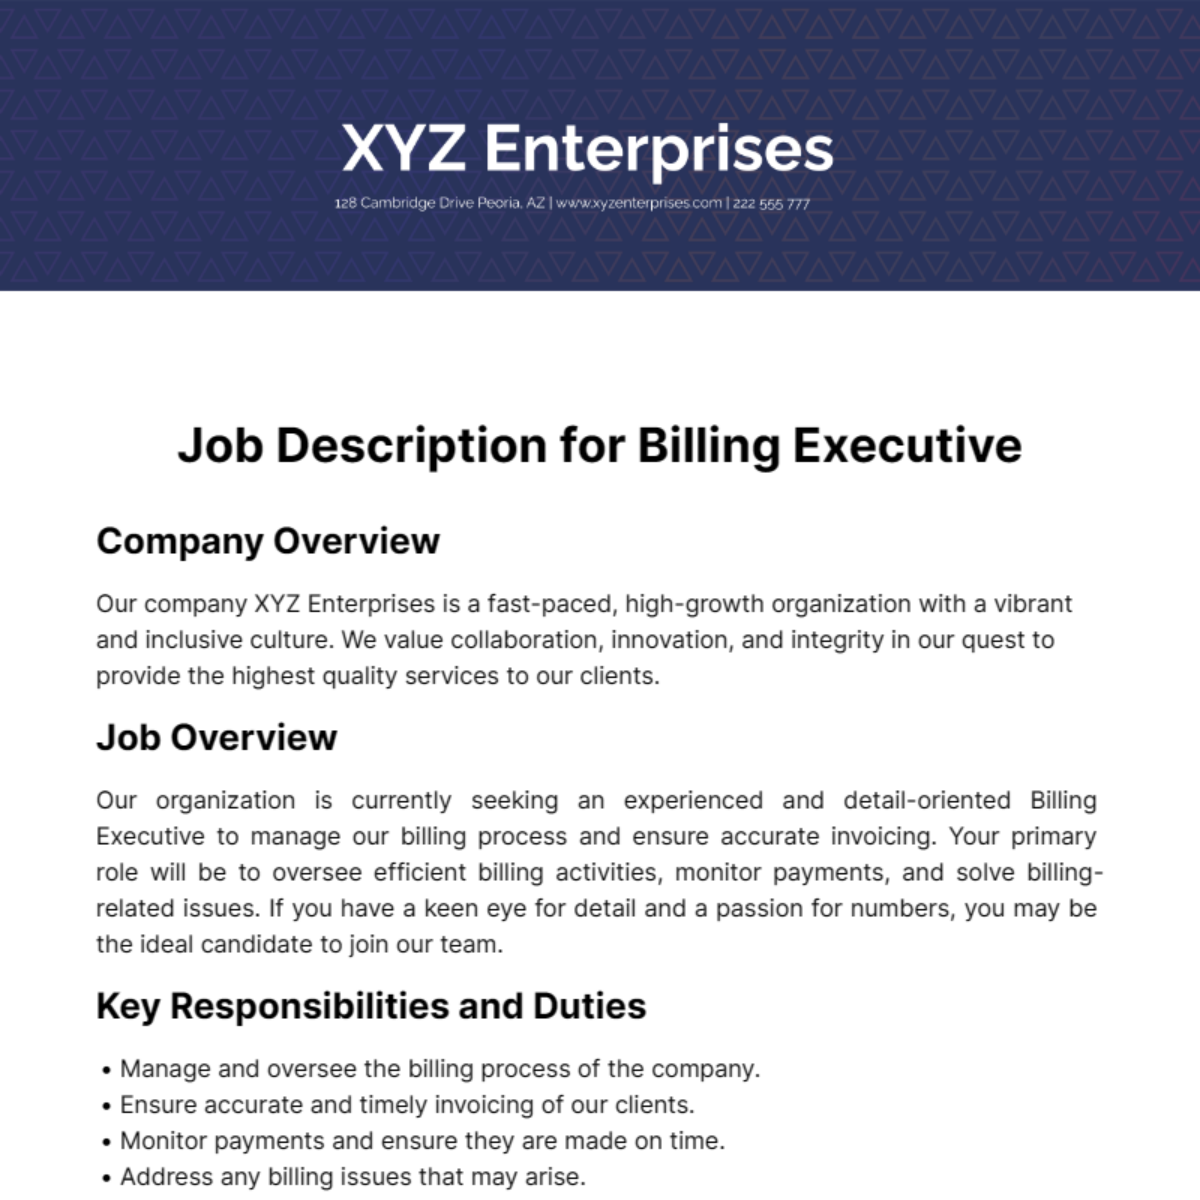 Job Description for Billing Executive Template